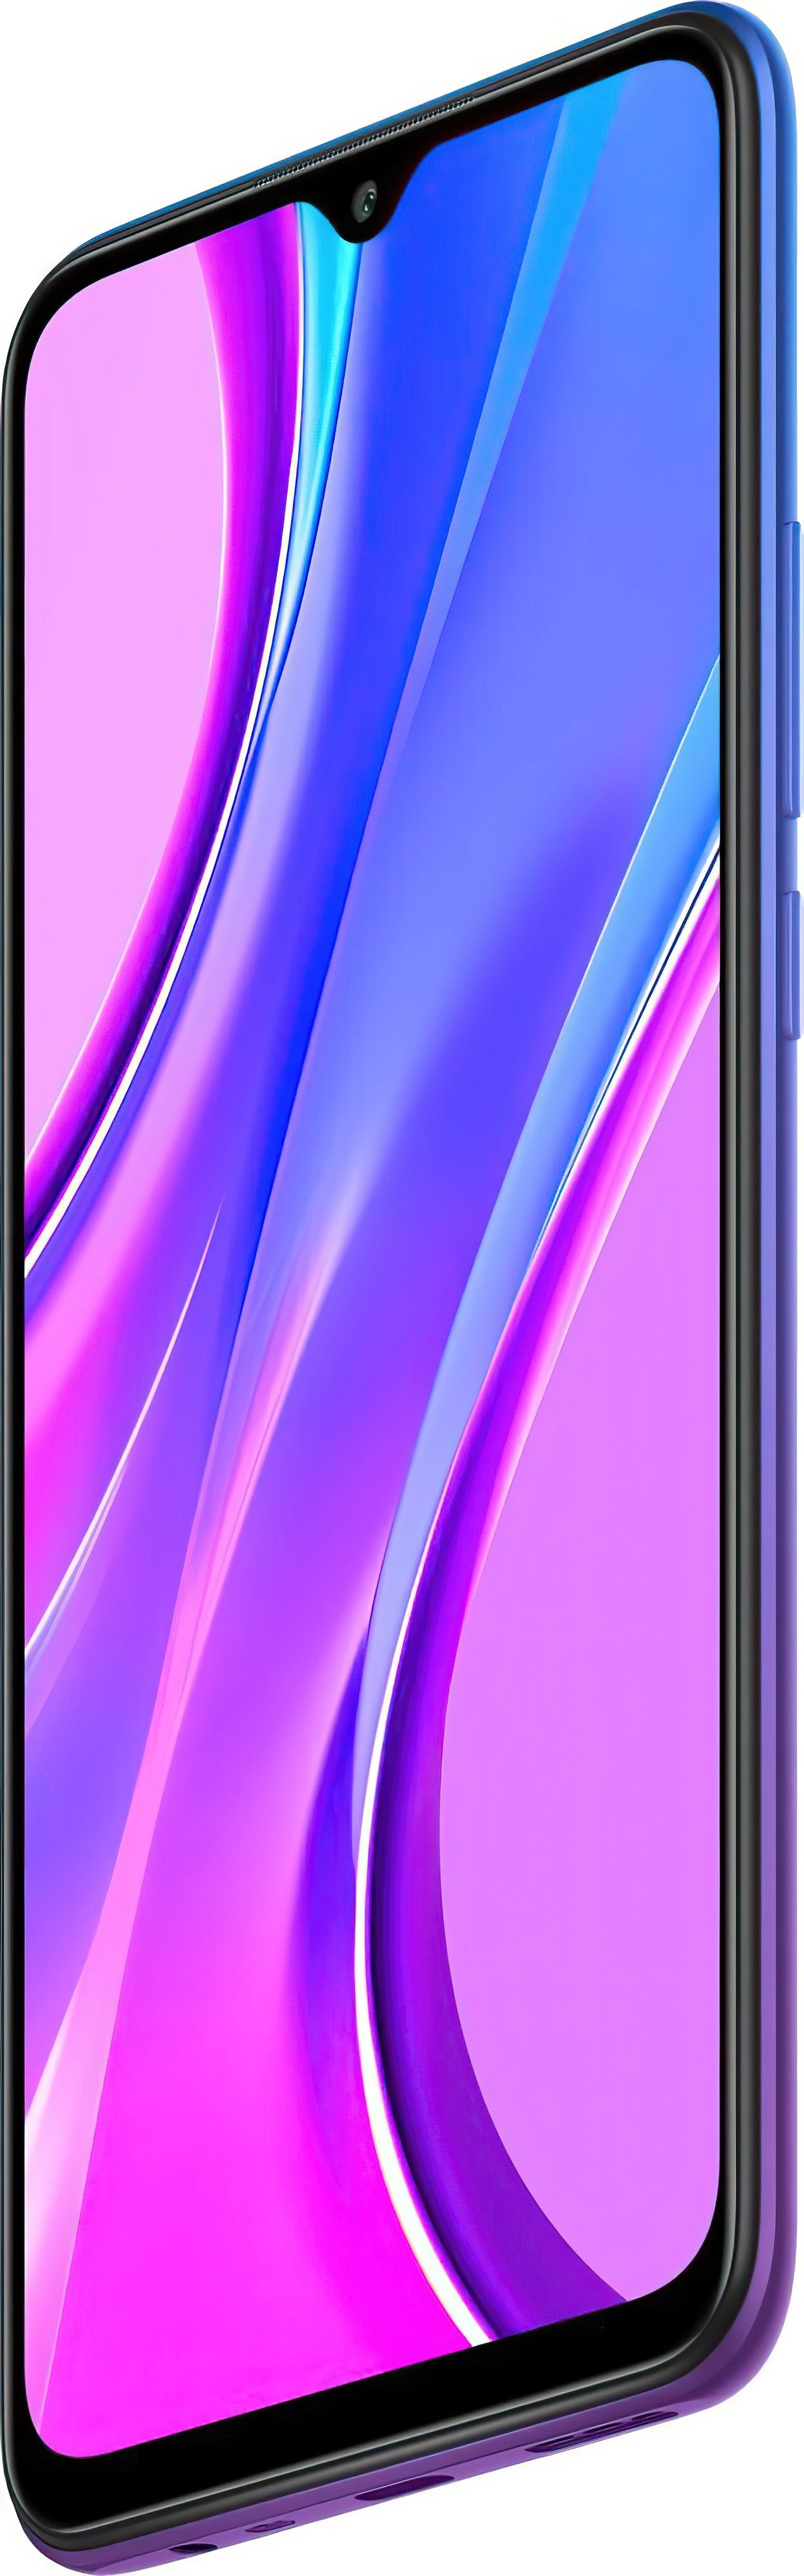 Смартфон Xiaomi Redmi 9 3/32GB Sunset Purple фото 4